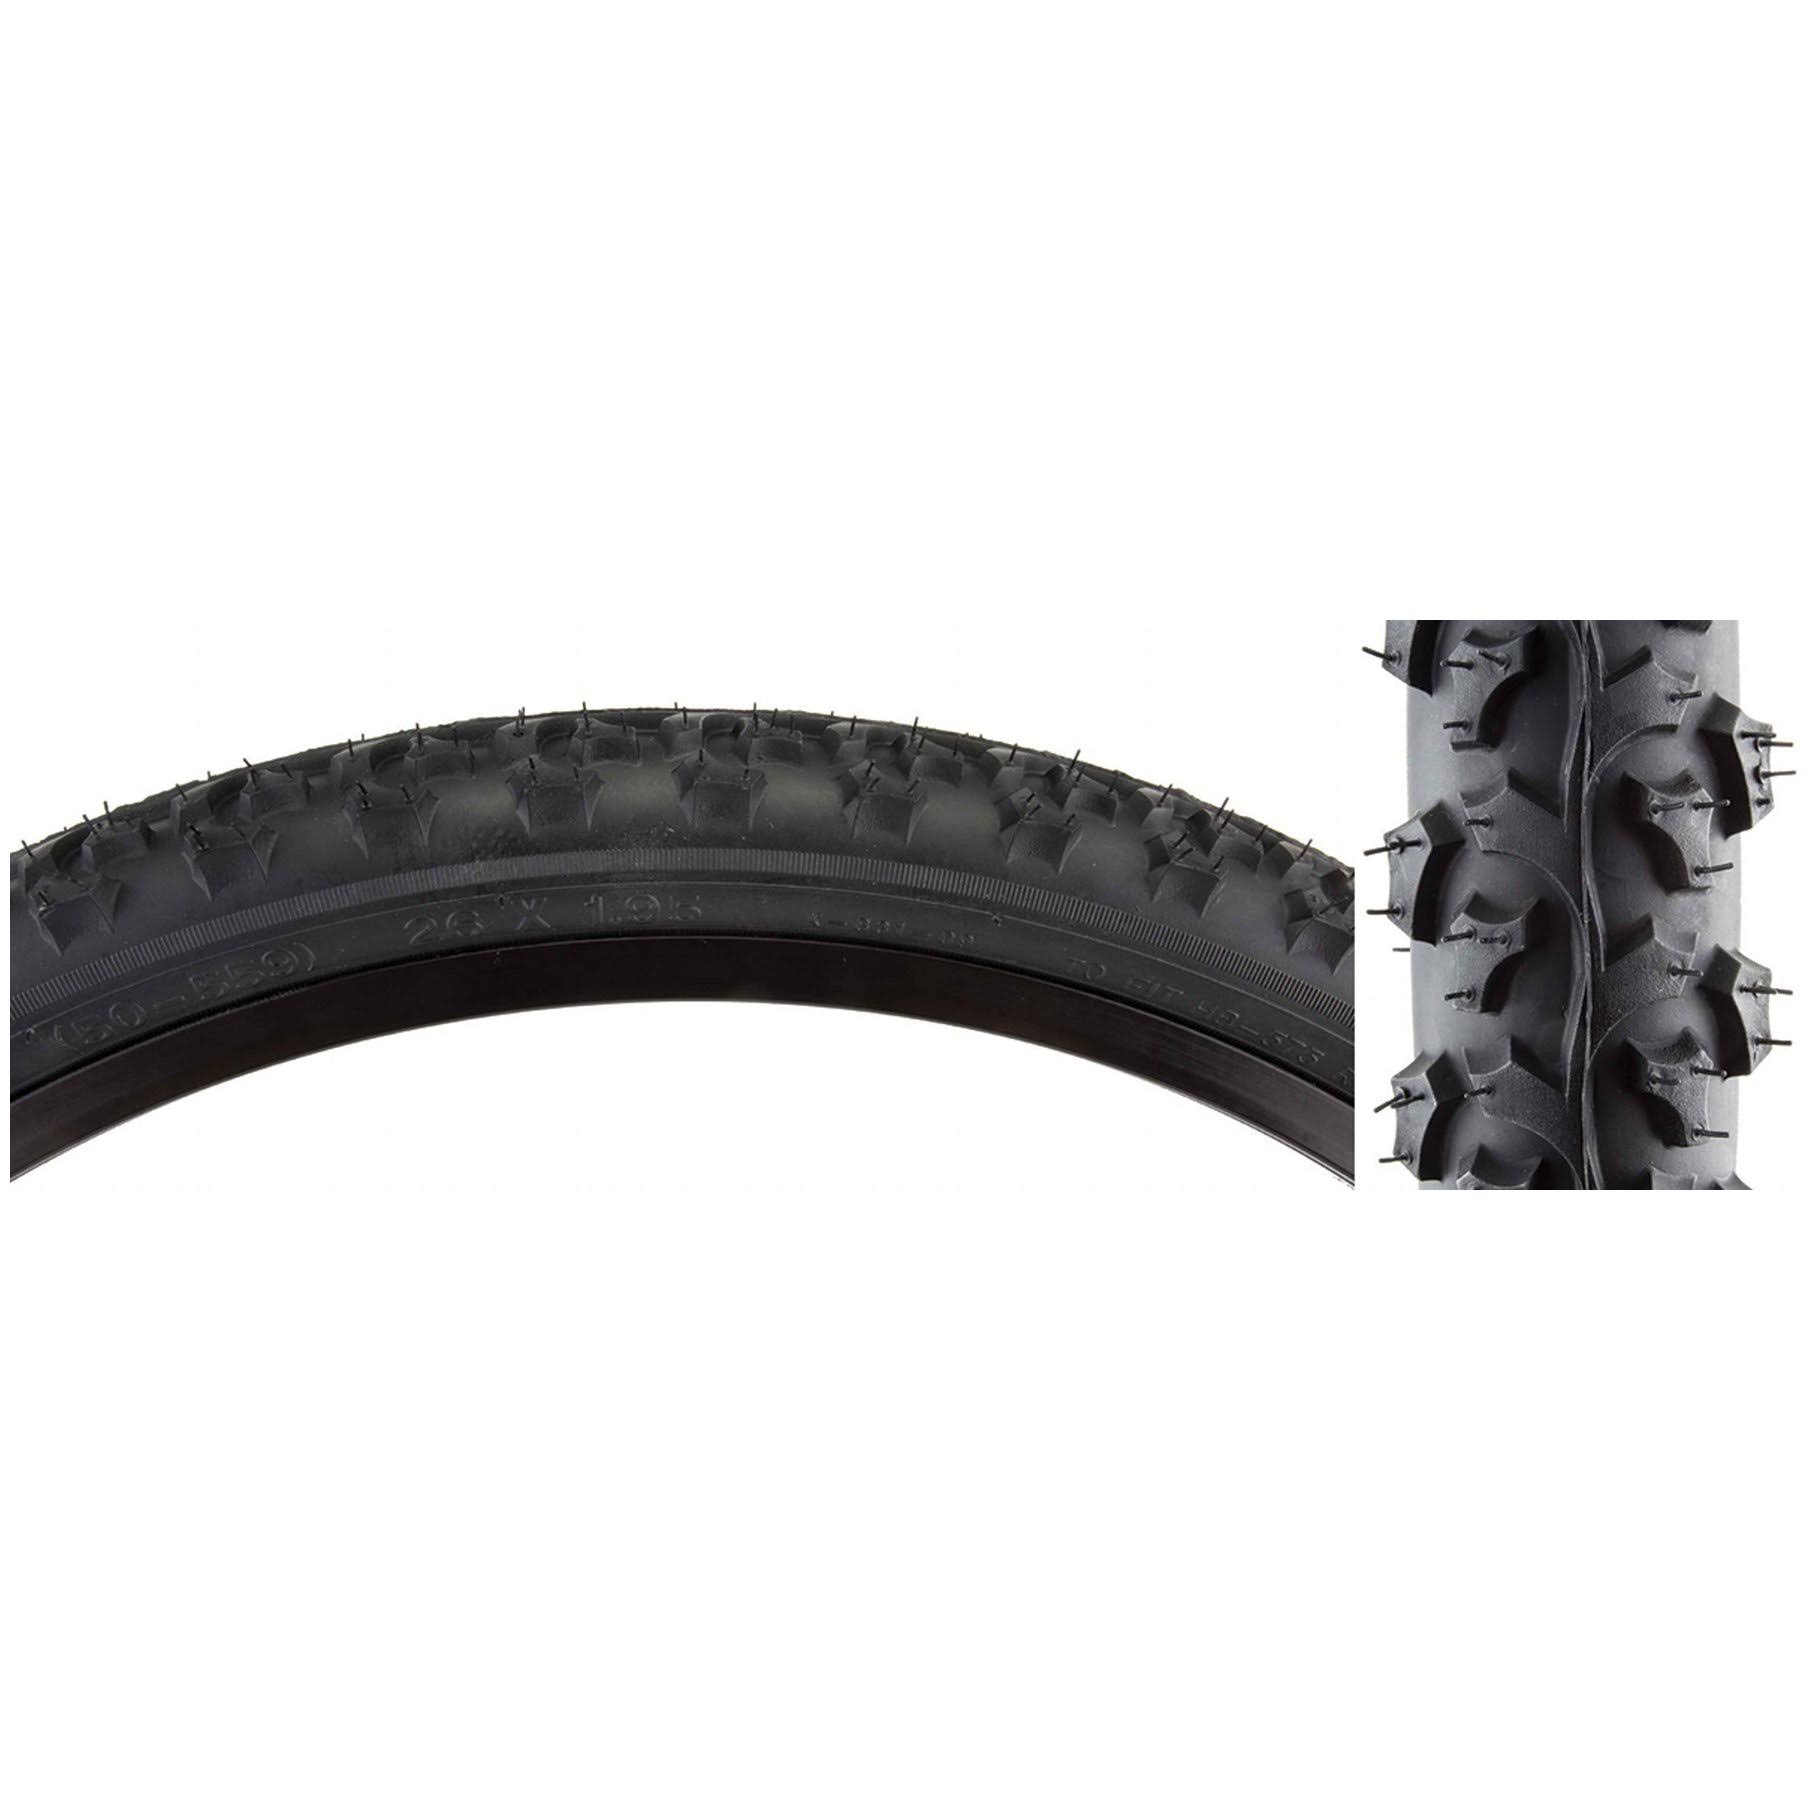 Sunlite Bicycle Kenda K831 Alpha Bite Trail Tire - Black